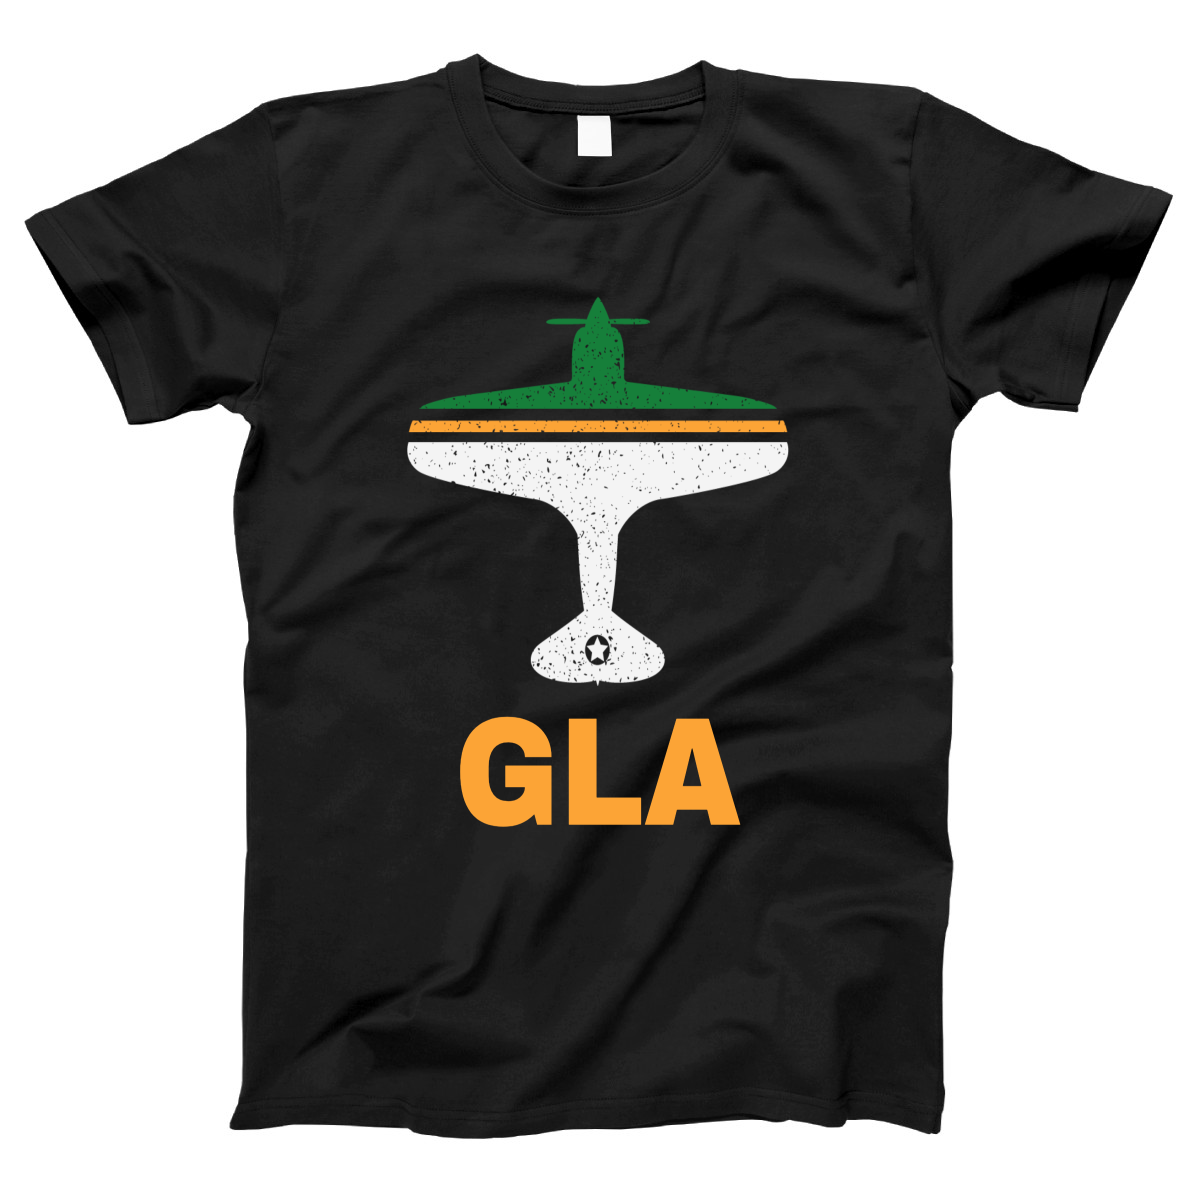 Fly Glasgow GLA Airport Women's T-shirt | Black